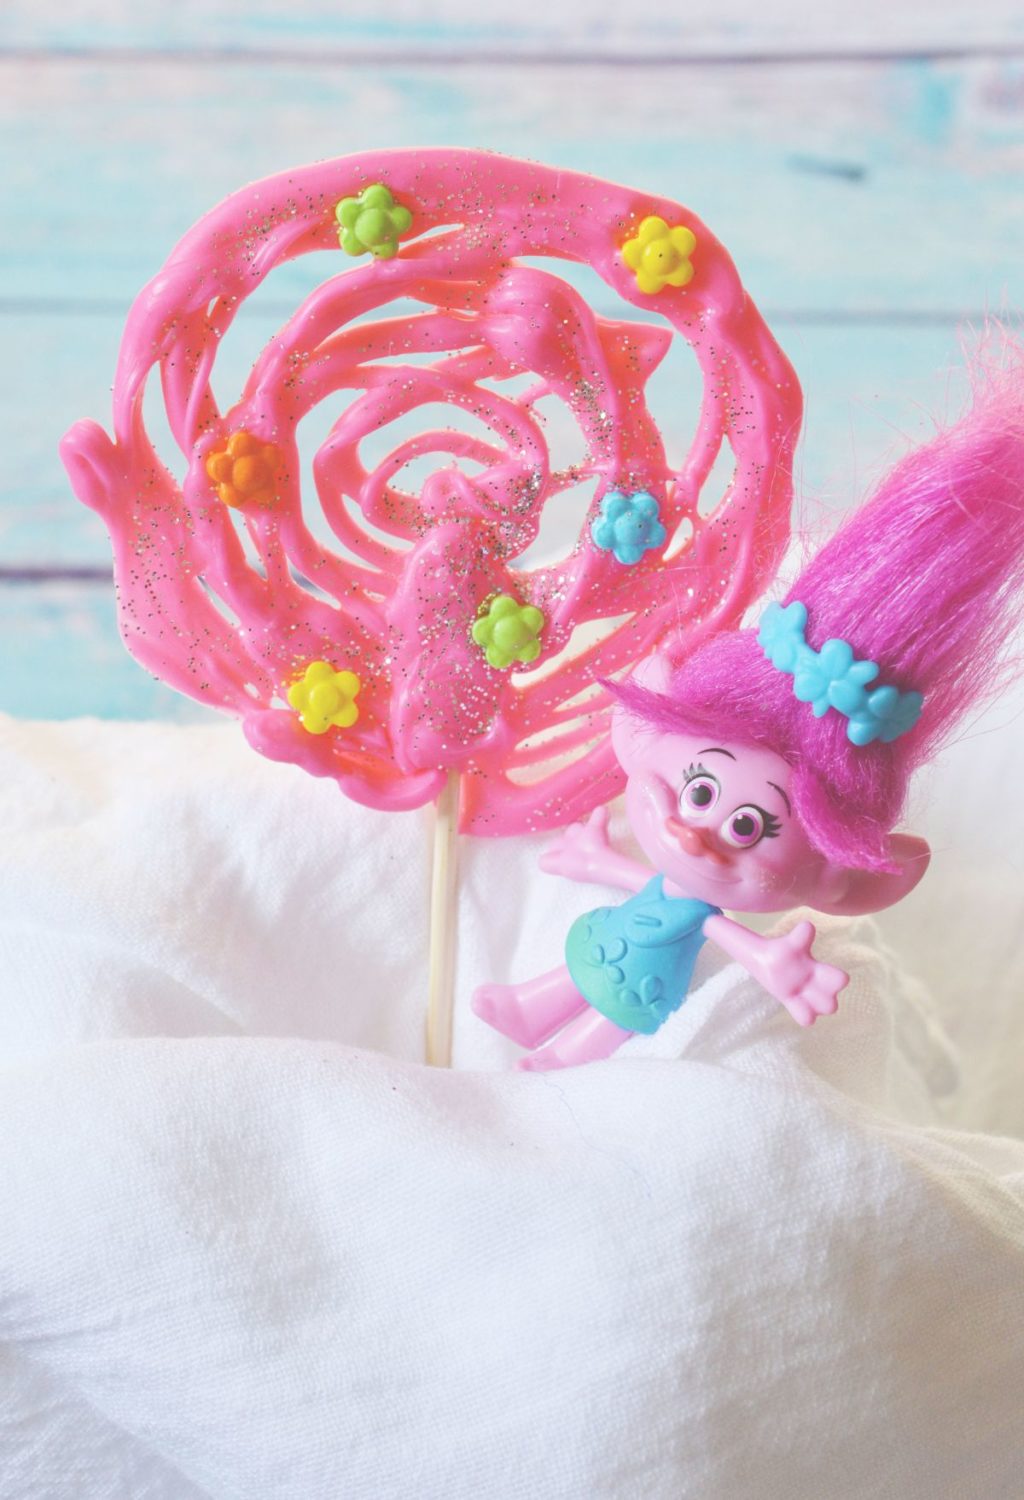 Trolls lollipops with a pink troll doll on top.